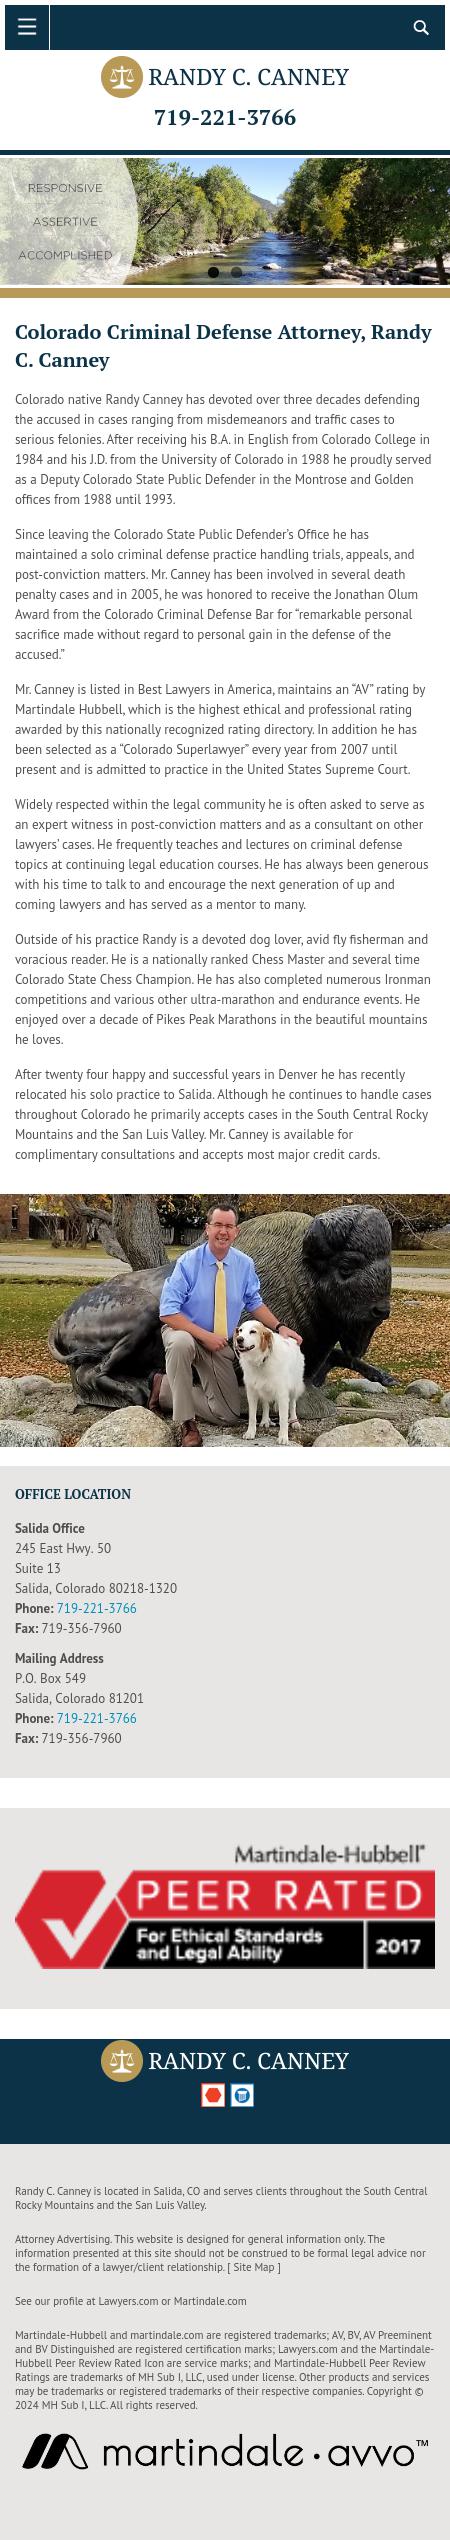 Randy C. Canney - Denver CO Lawyers